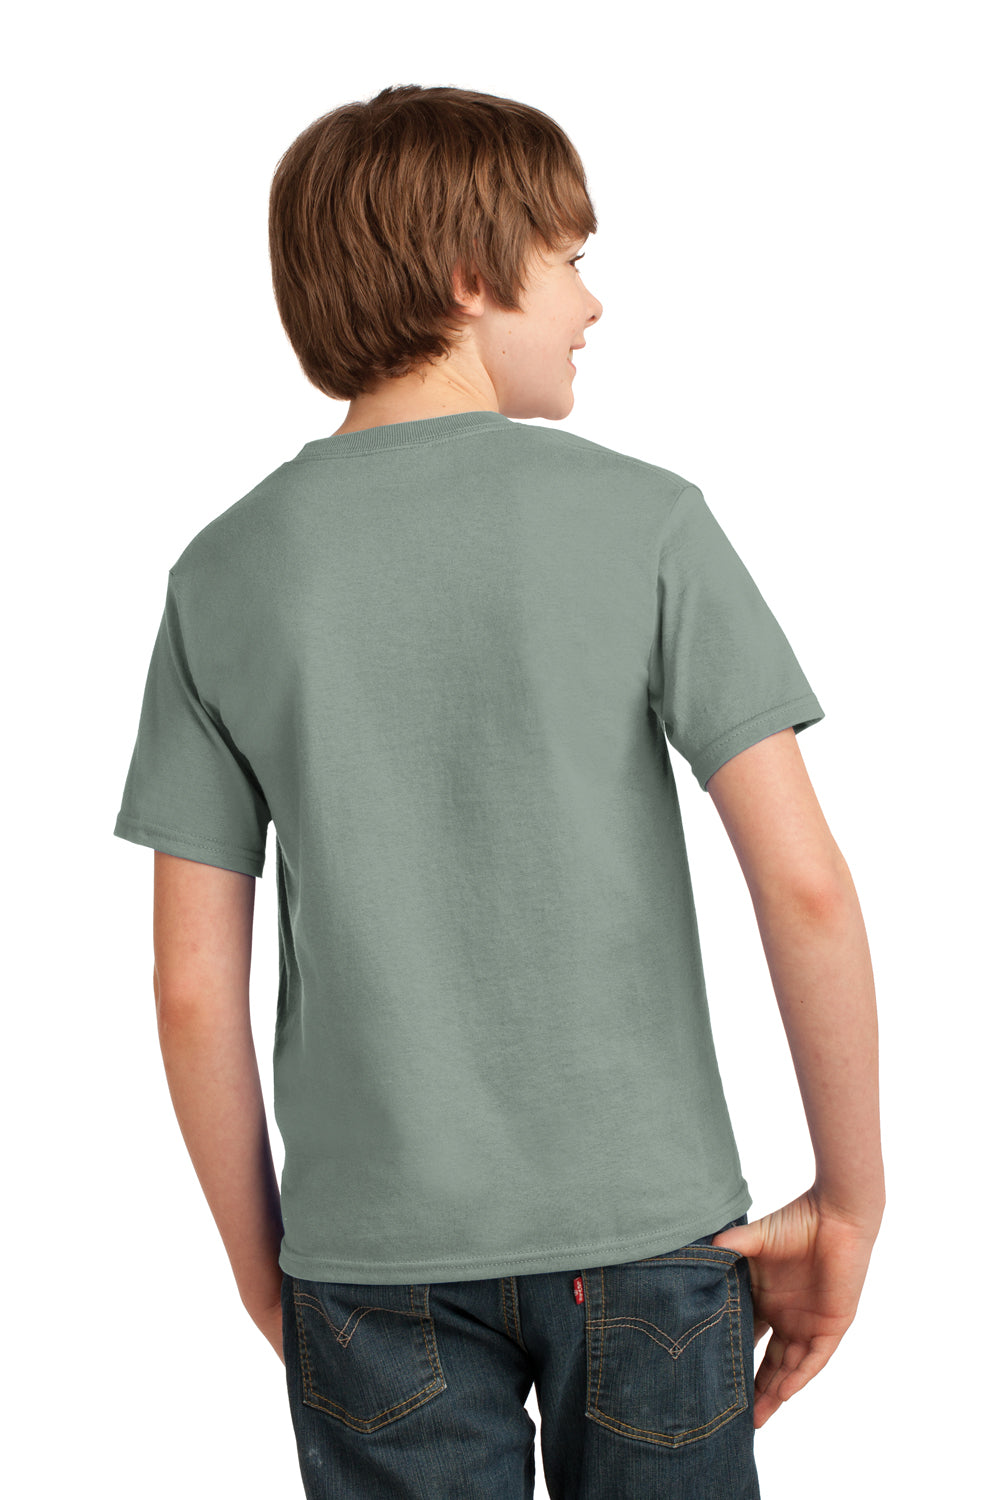 Port & Company PC61Y Youth Essential Short Sleeve Crewneck T-Shirt Stonewashed Green Back